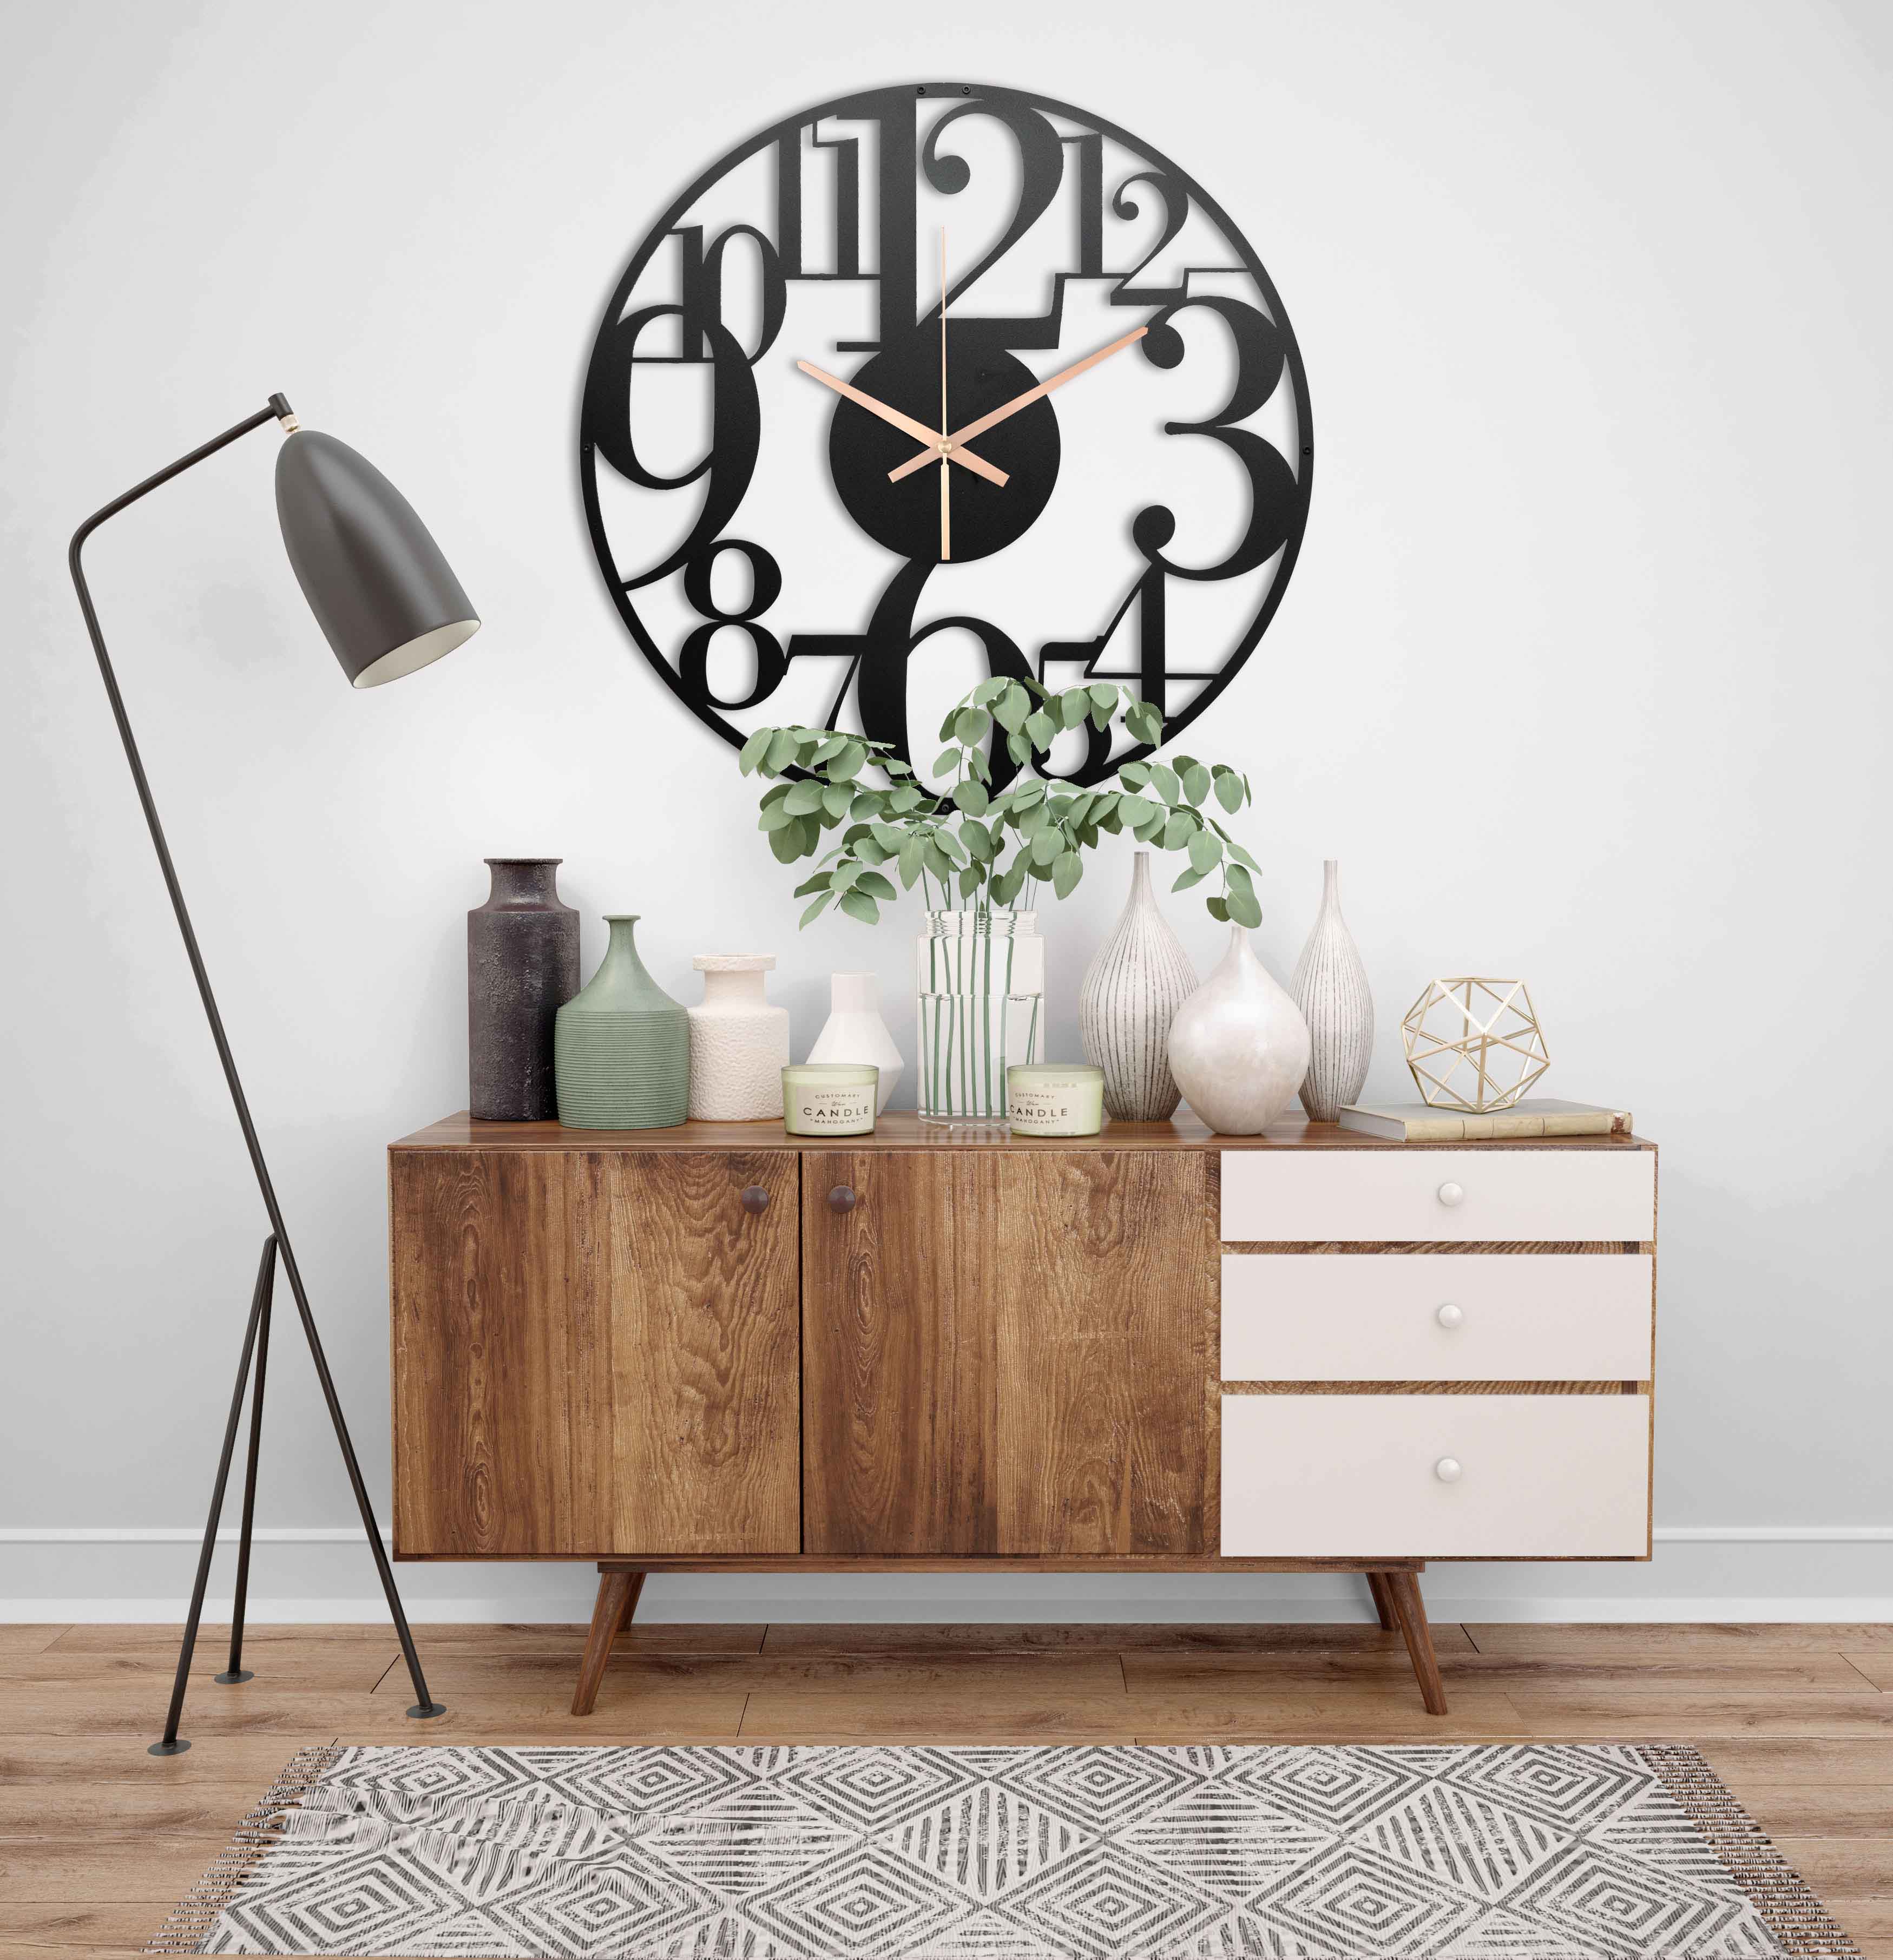 Asymmetric Clock, Decorative Clock, Metal Wall Clock, Oversized Wall Clock, Large Silent Wall Clock, Housewarming Gift, Big Clocks For Wall